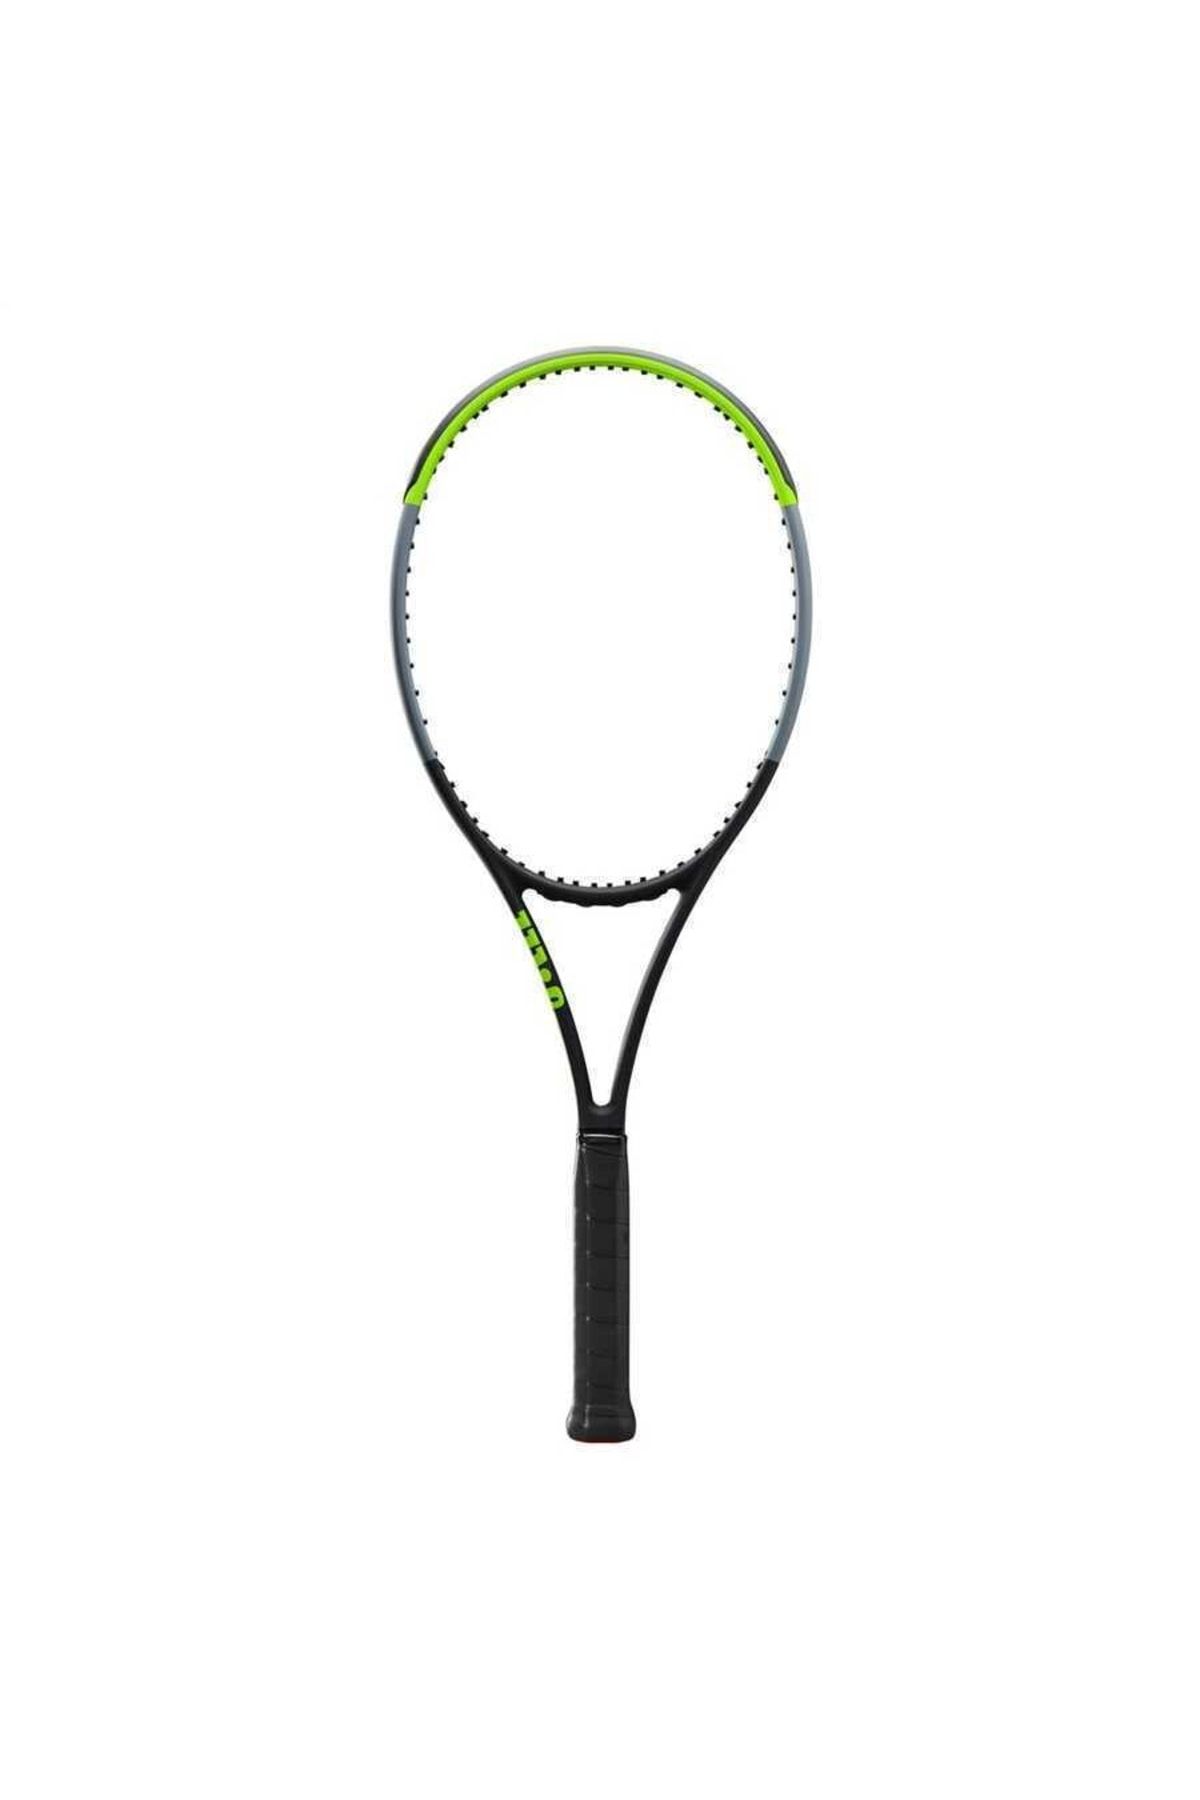 Wilson Blade 98s V7 Tenis Raketi Wr013811